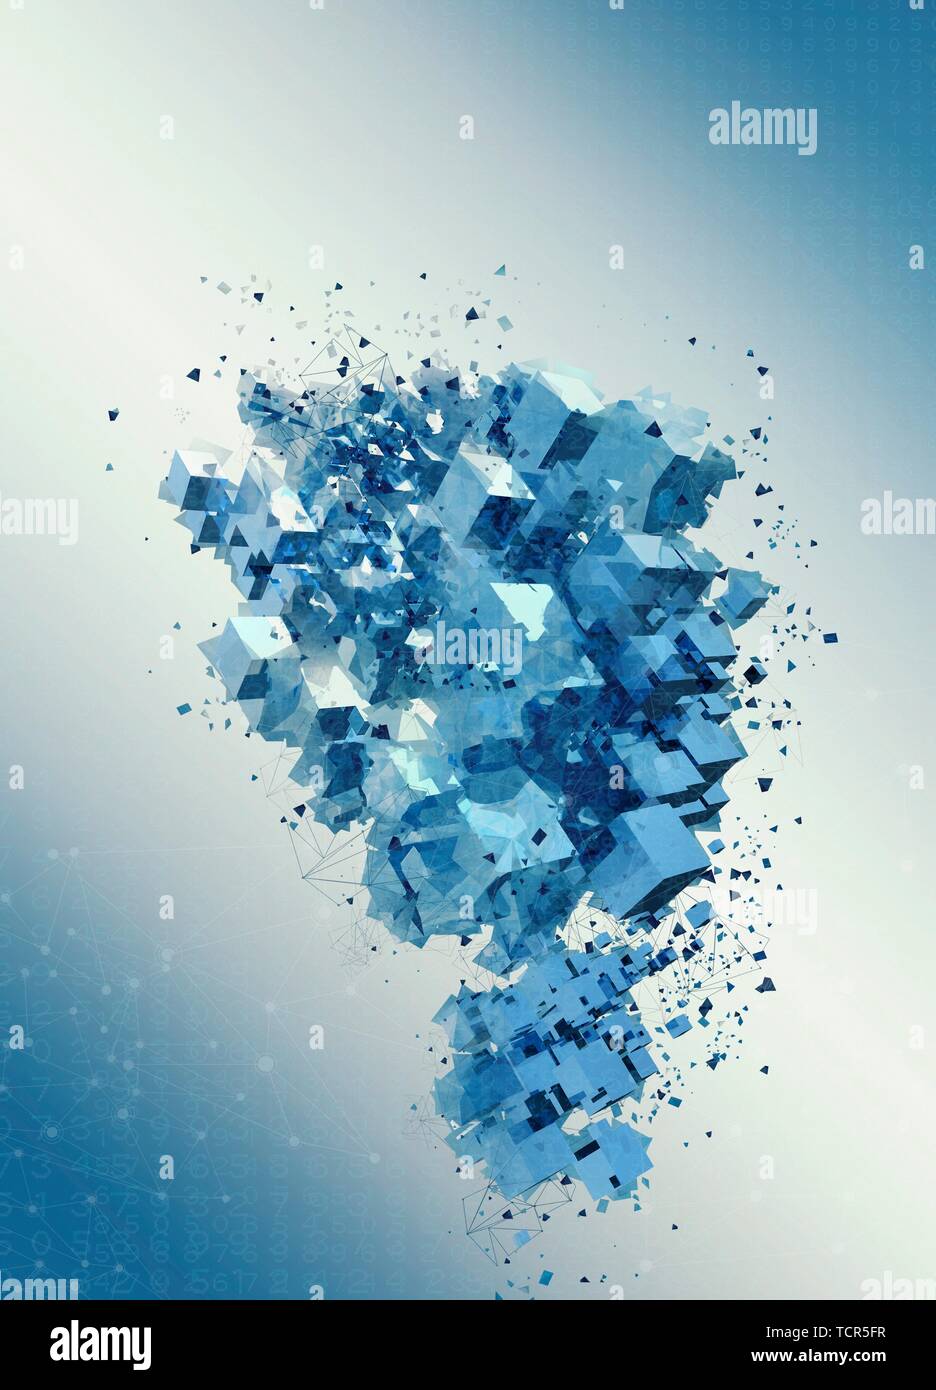 Blue cubes, illustration Stock Photo